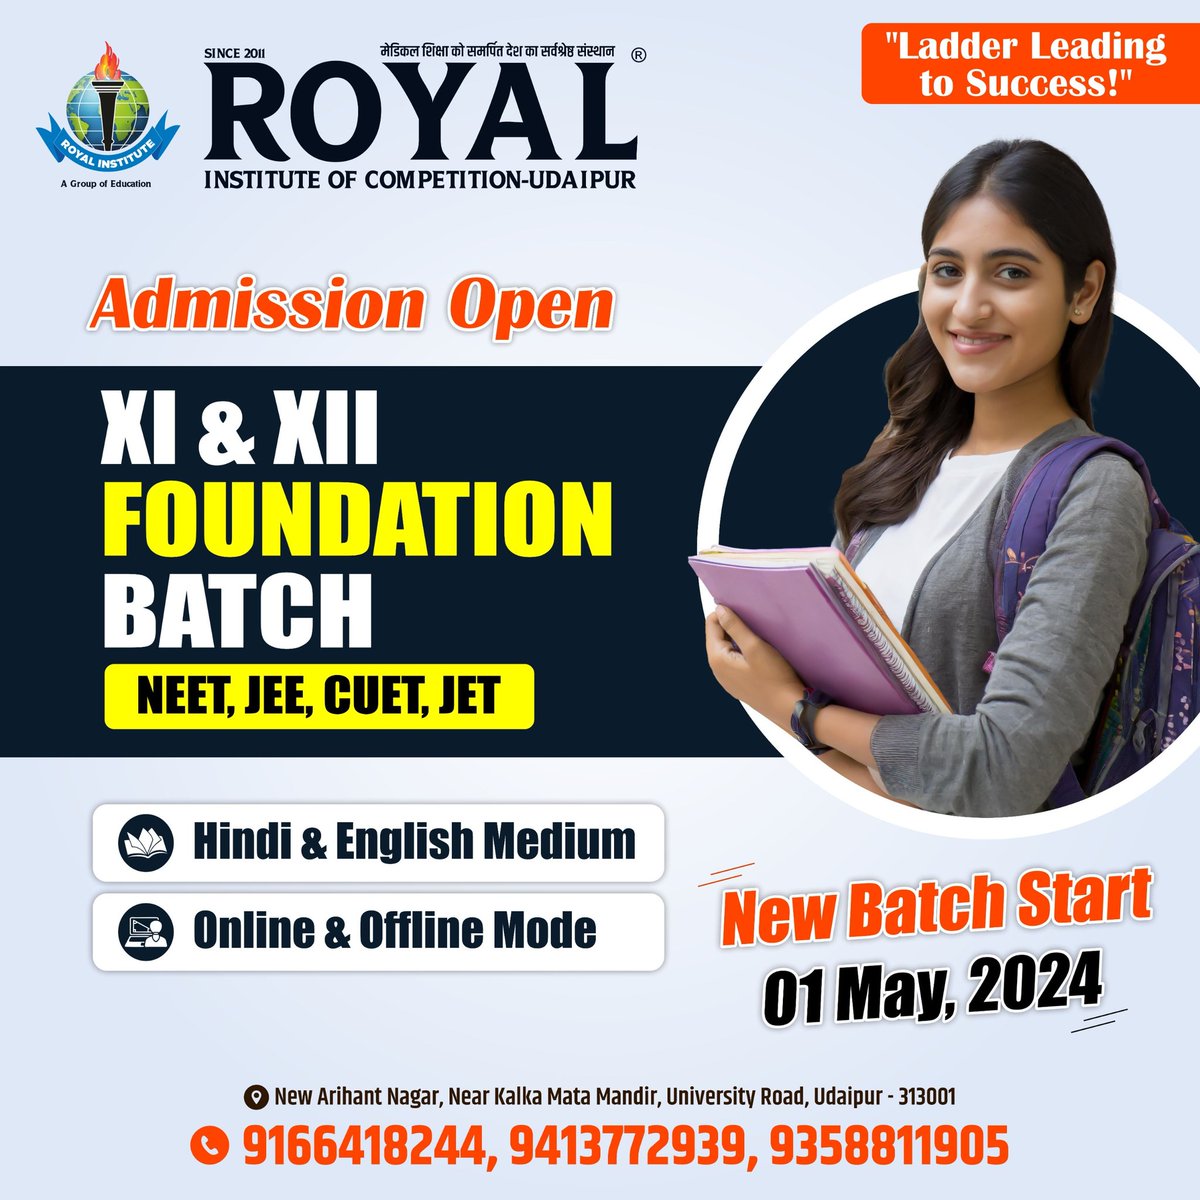 🏛️ Royal Institute ,Udaipur 🏛️

 👩‍🏫👩‍🍳 Admission Open 👩‍🎓👩‍🍳 

👉 NEW BATCH START 01 May,2024  
👉 11th & 12th Foundation Batch         (NEET / JEE / CUET / JET) 

#royalinstituteudaipur
@udaipur_royal @deepak99291